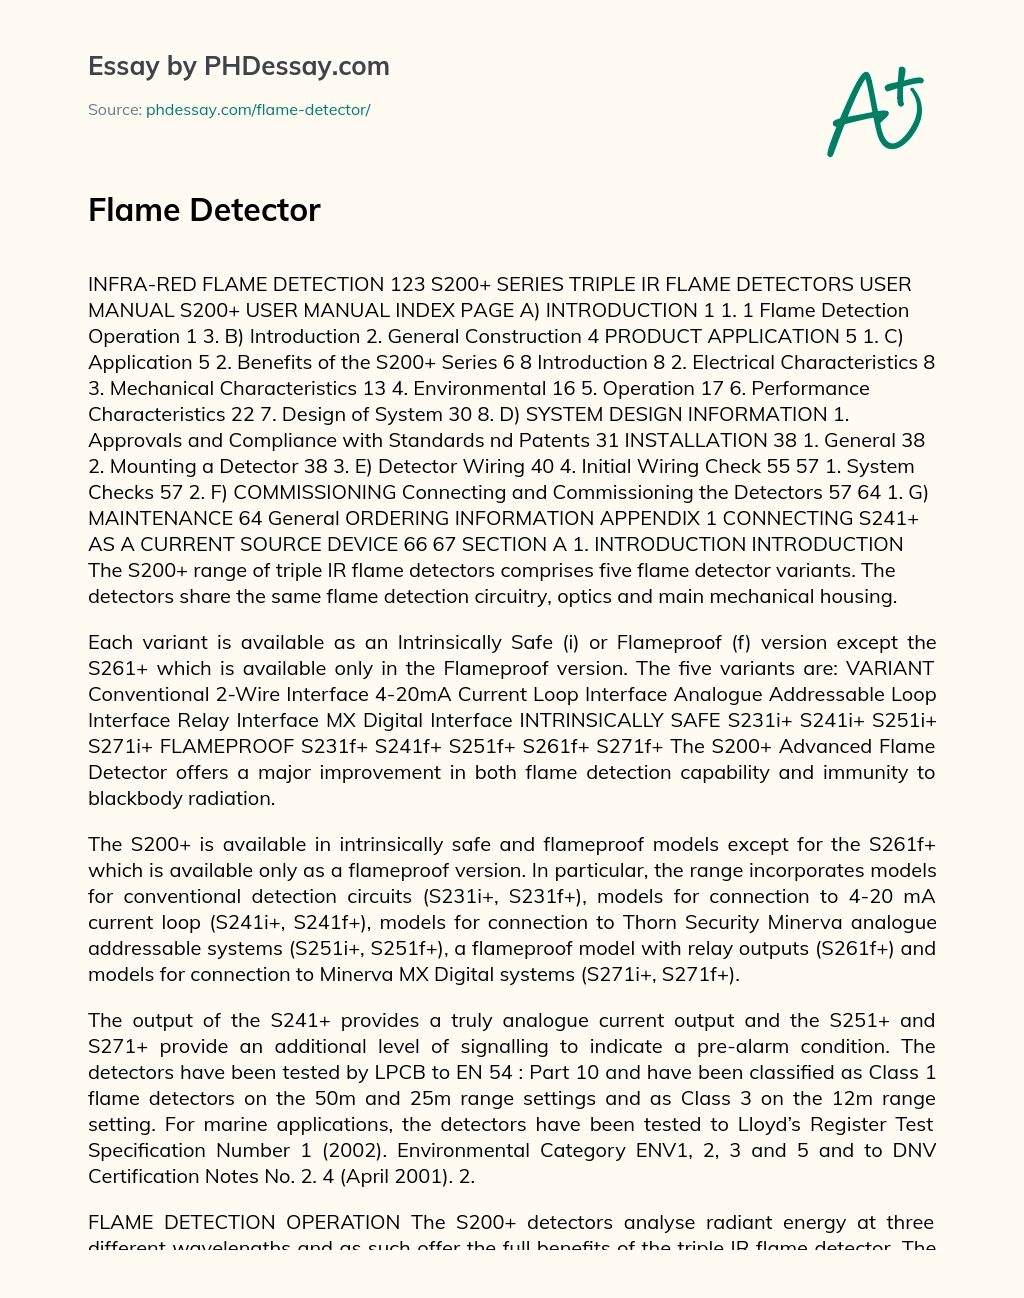 Flame Detector essay